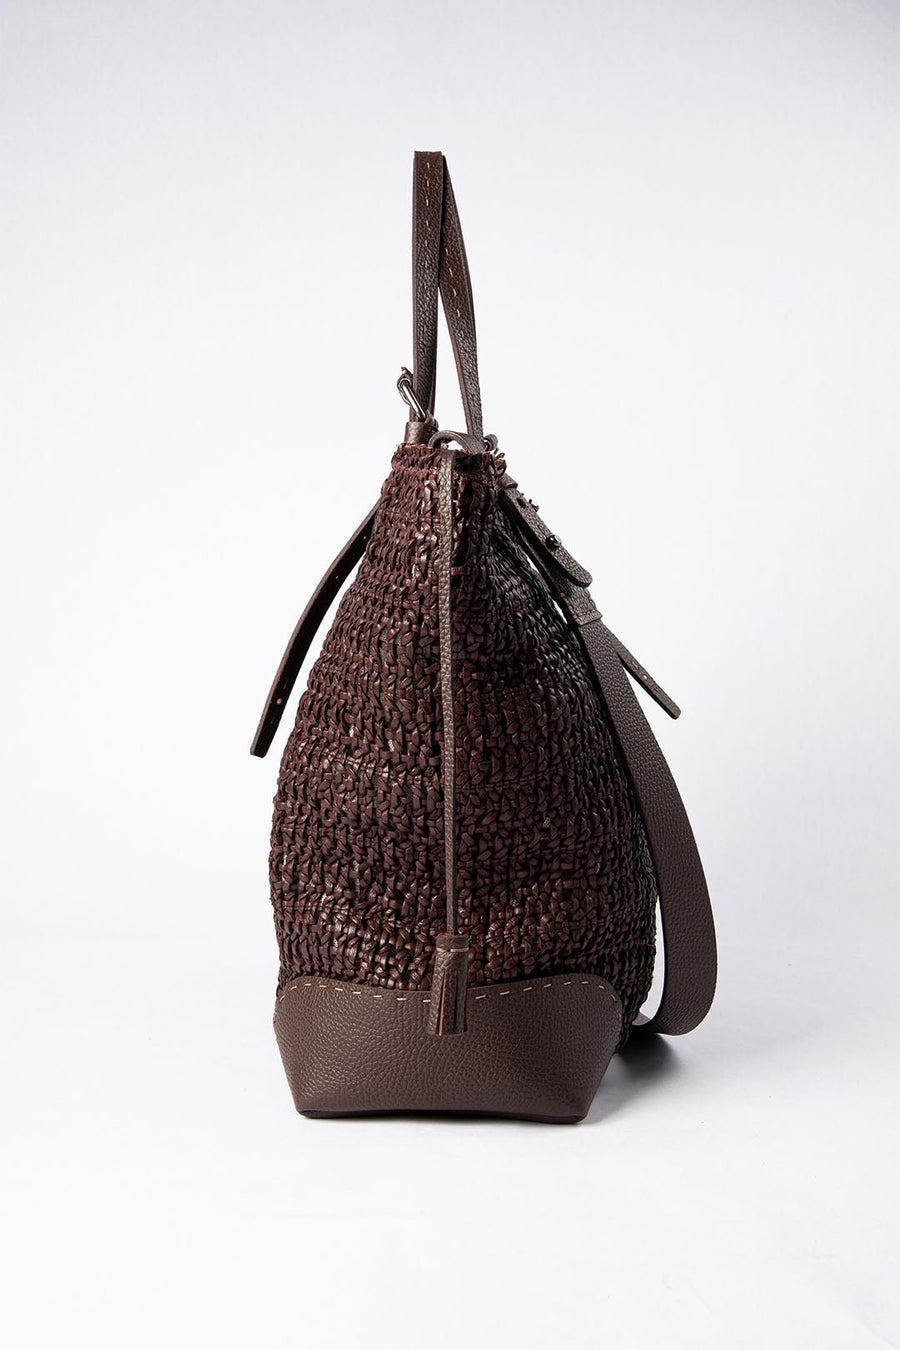 Vlogo Signature Embroidered Raffia Handbag for Woman in Natural/saddle  Brown